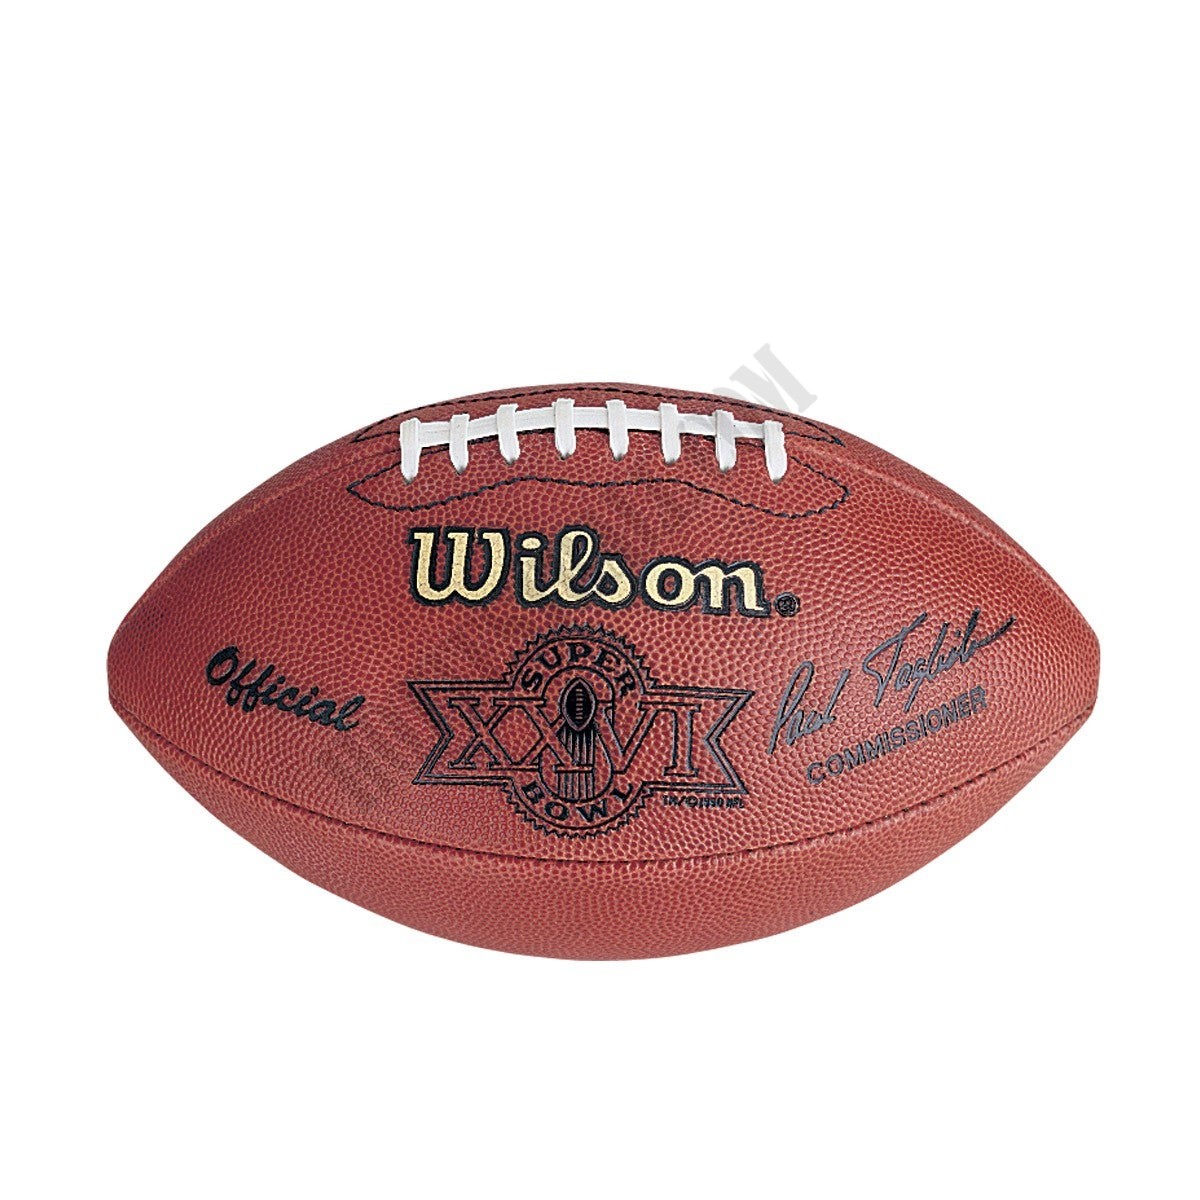 Super Bowl XXVI Game Football - Washington ● Wilson Promotions - -0